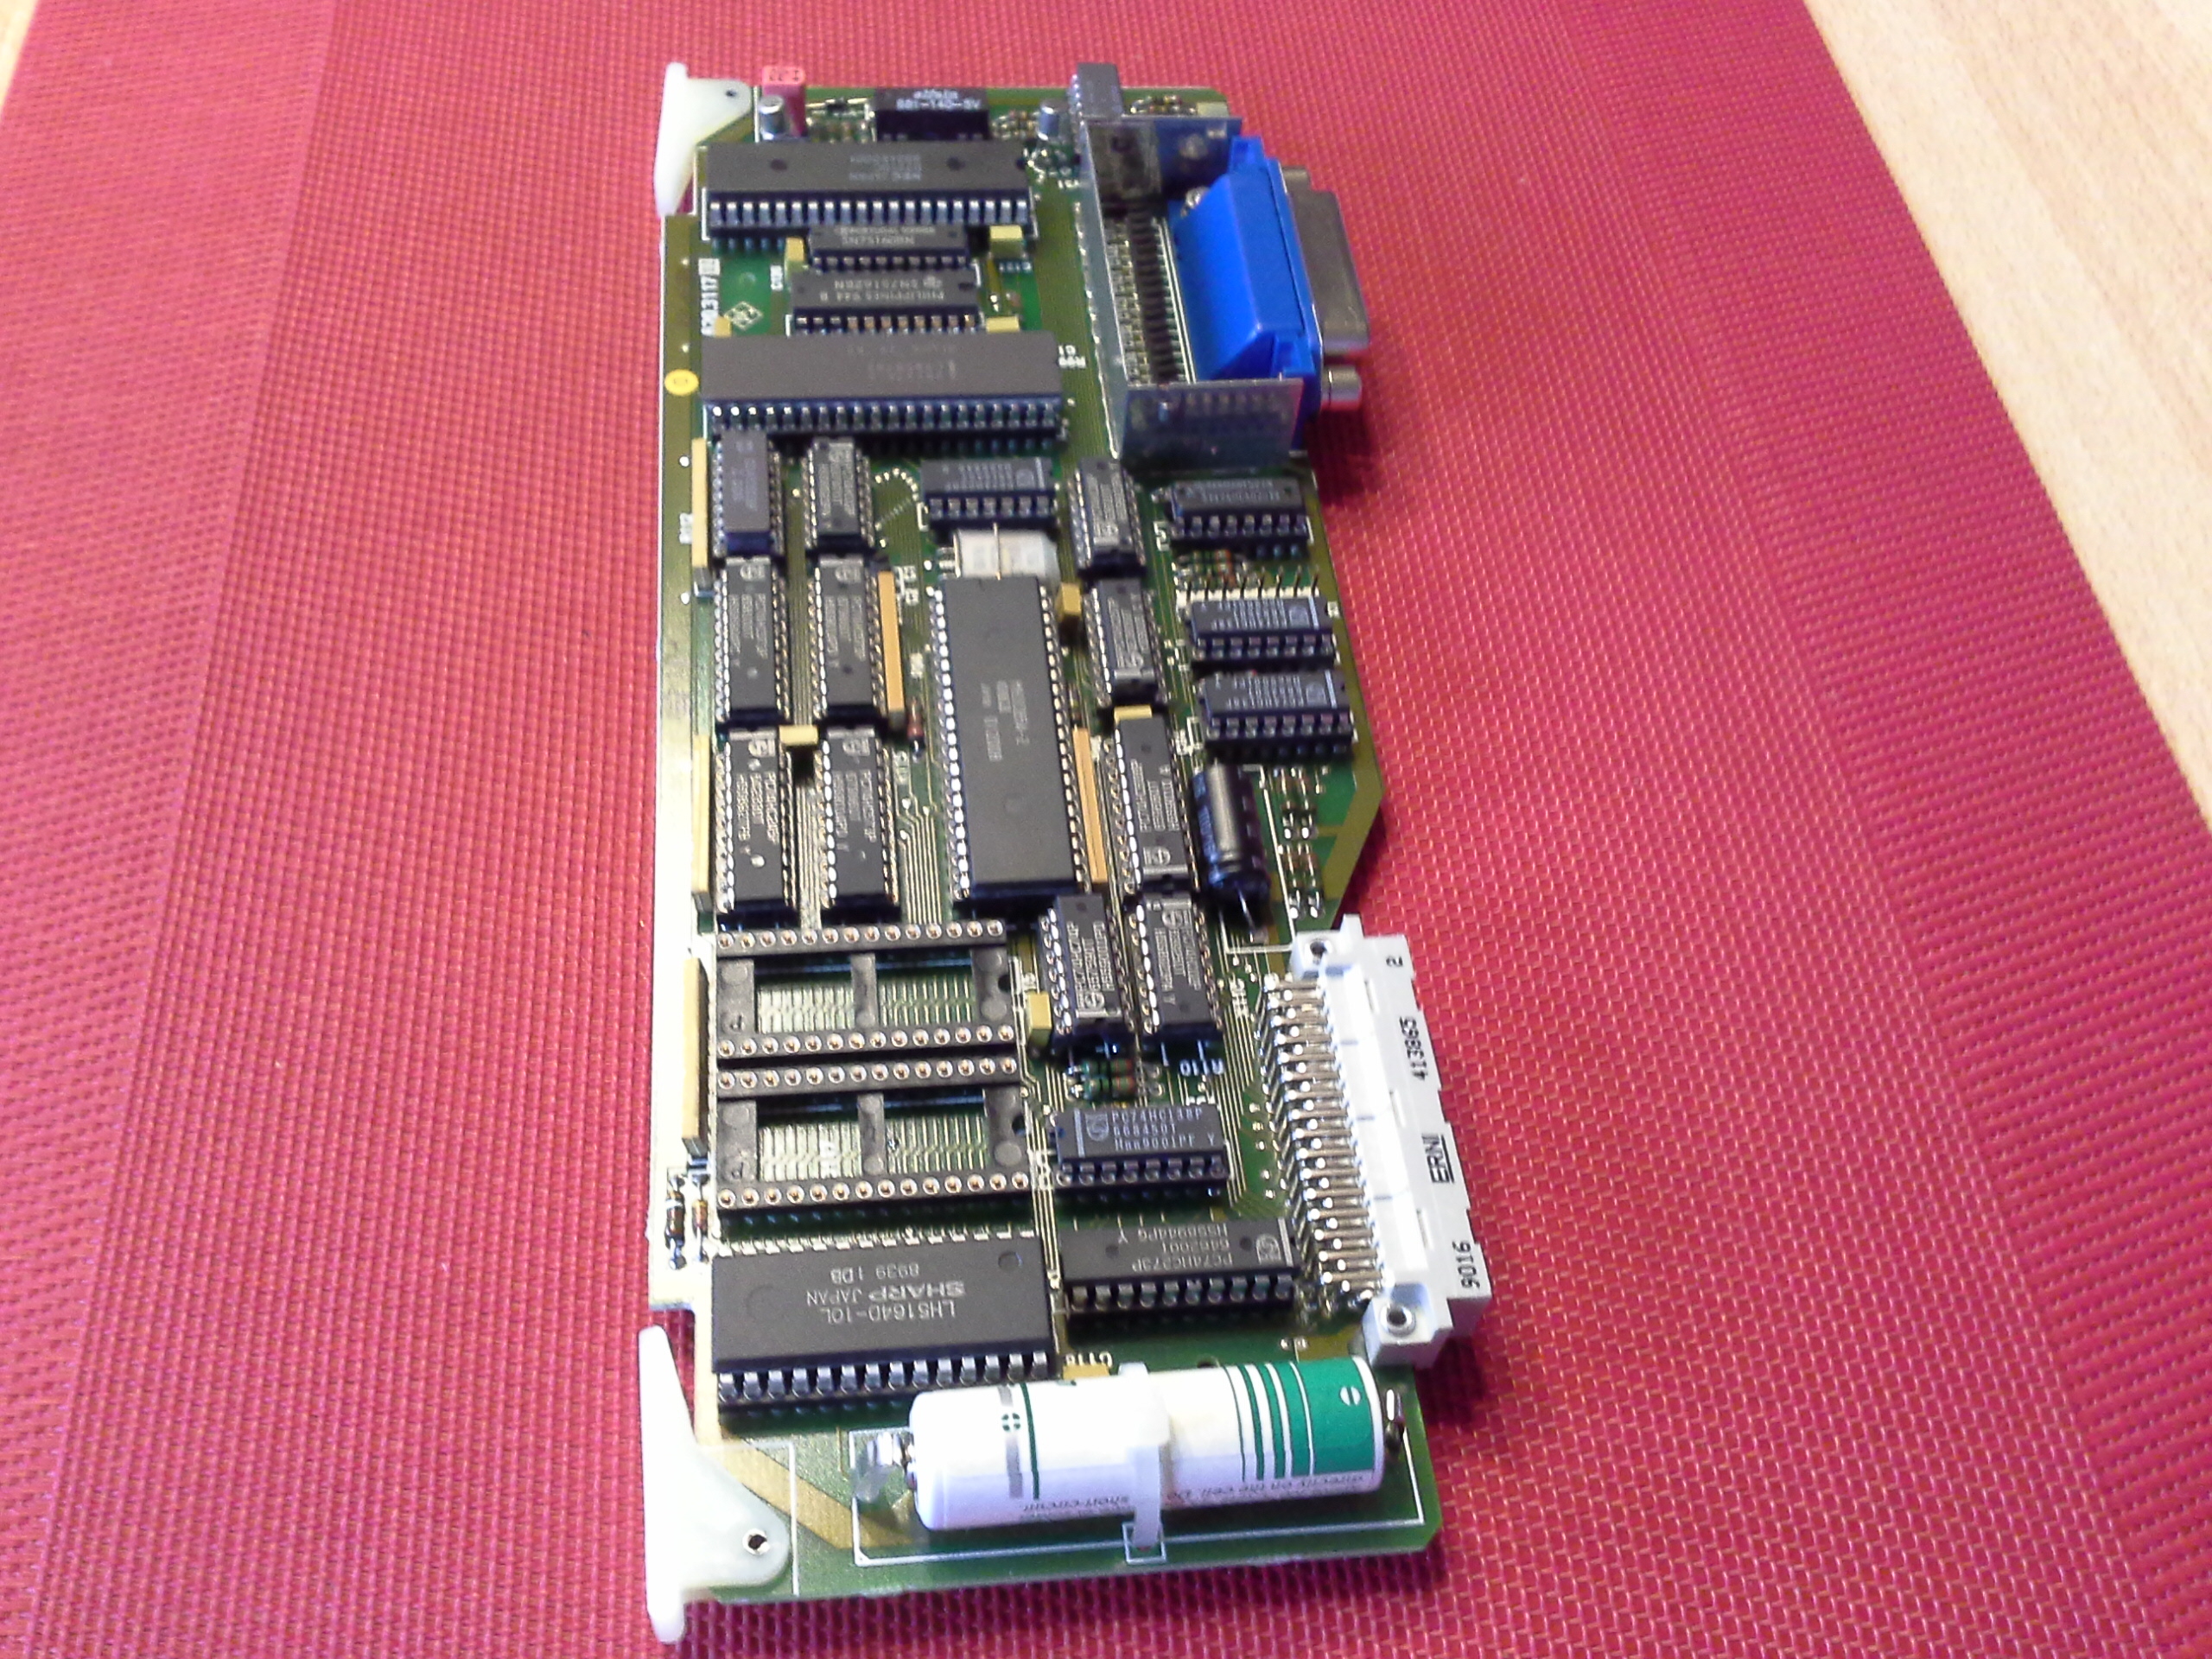 Gedruckte Schaltkreis Serial Adapter Cards for IBM PC